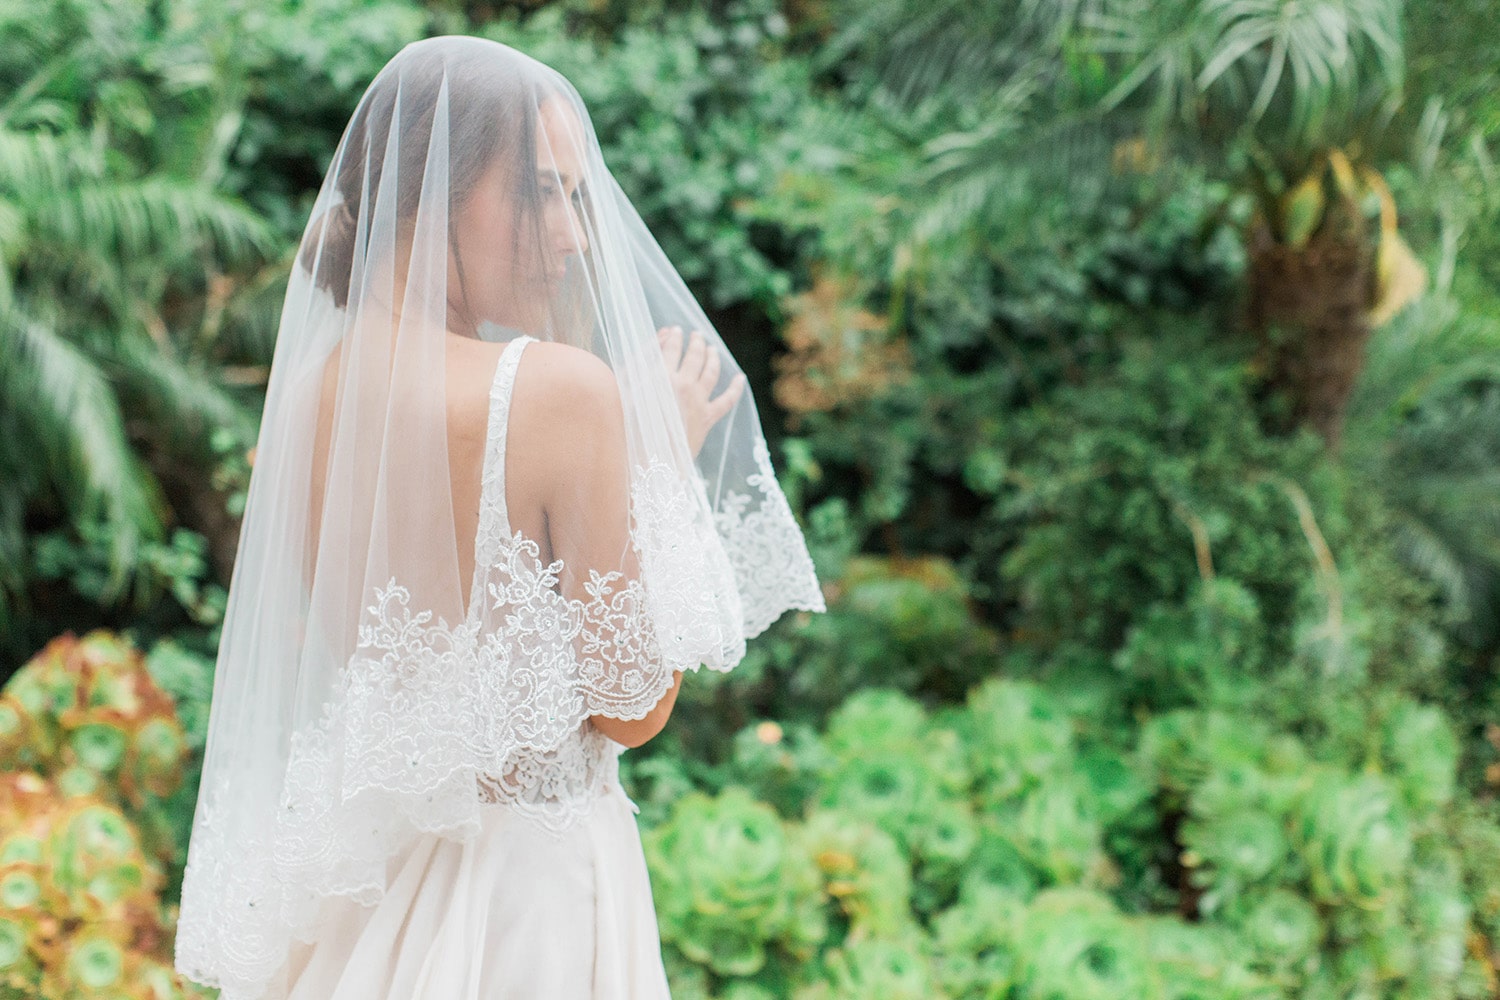 Brides & Hairpins Iven Chapel Veil with Blusher - Satin Ribbon Edging Retail